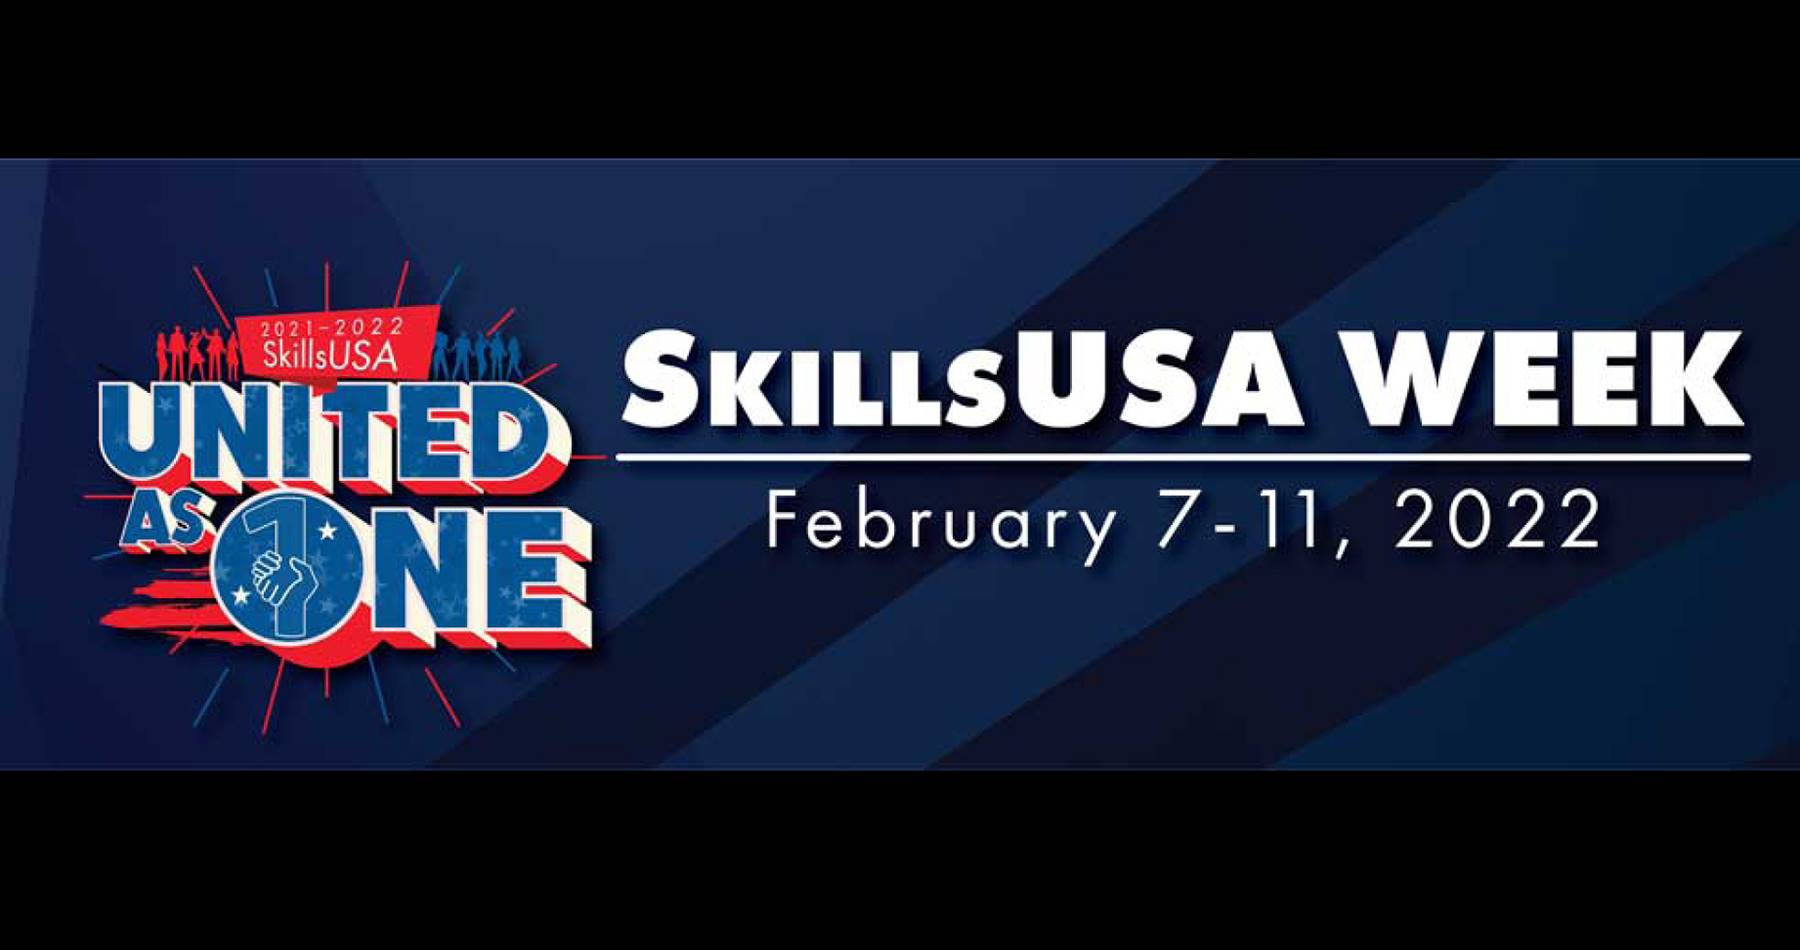 Skills USA Week